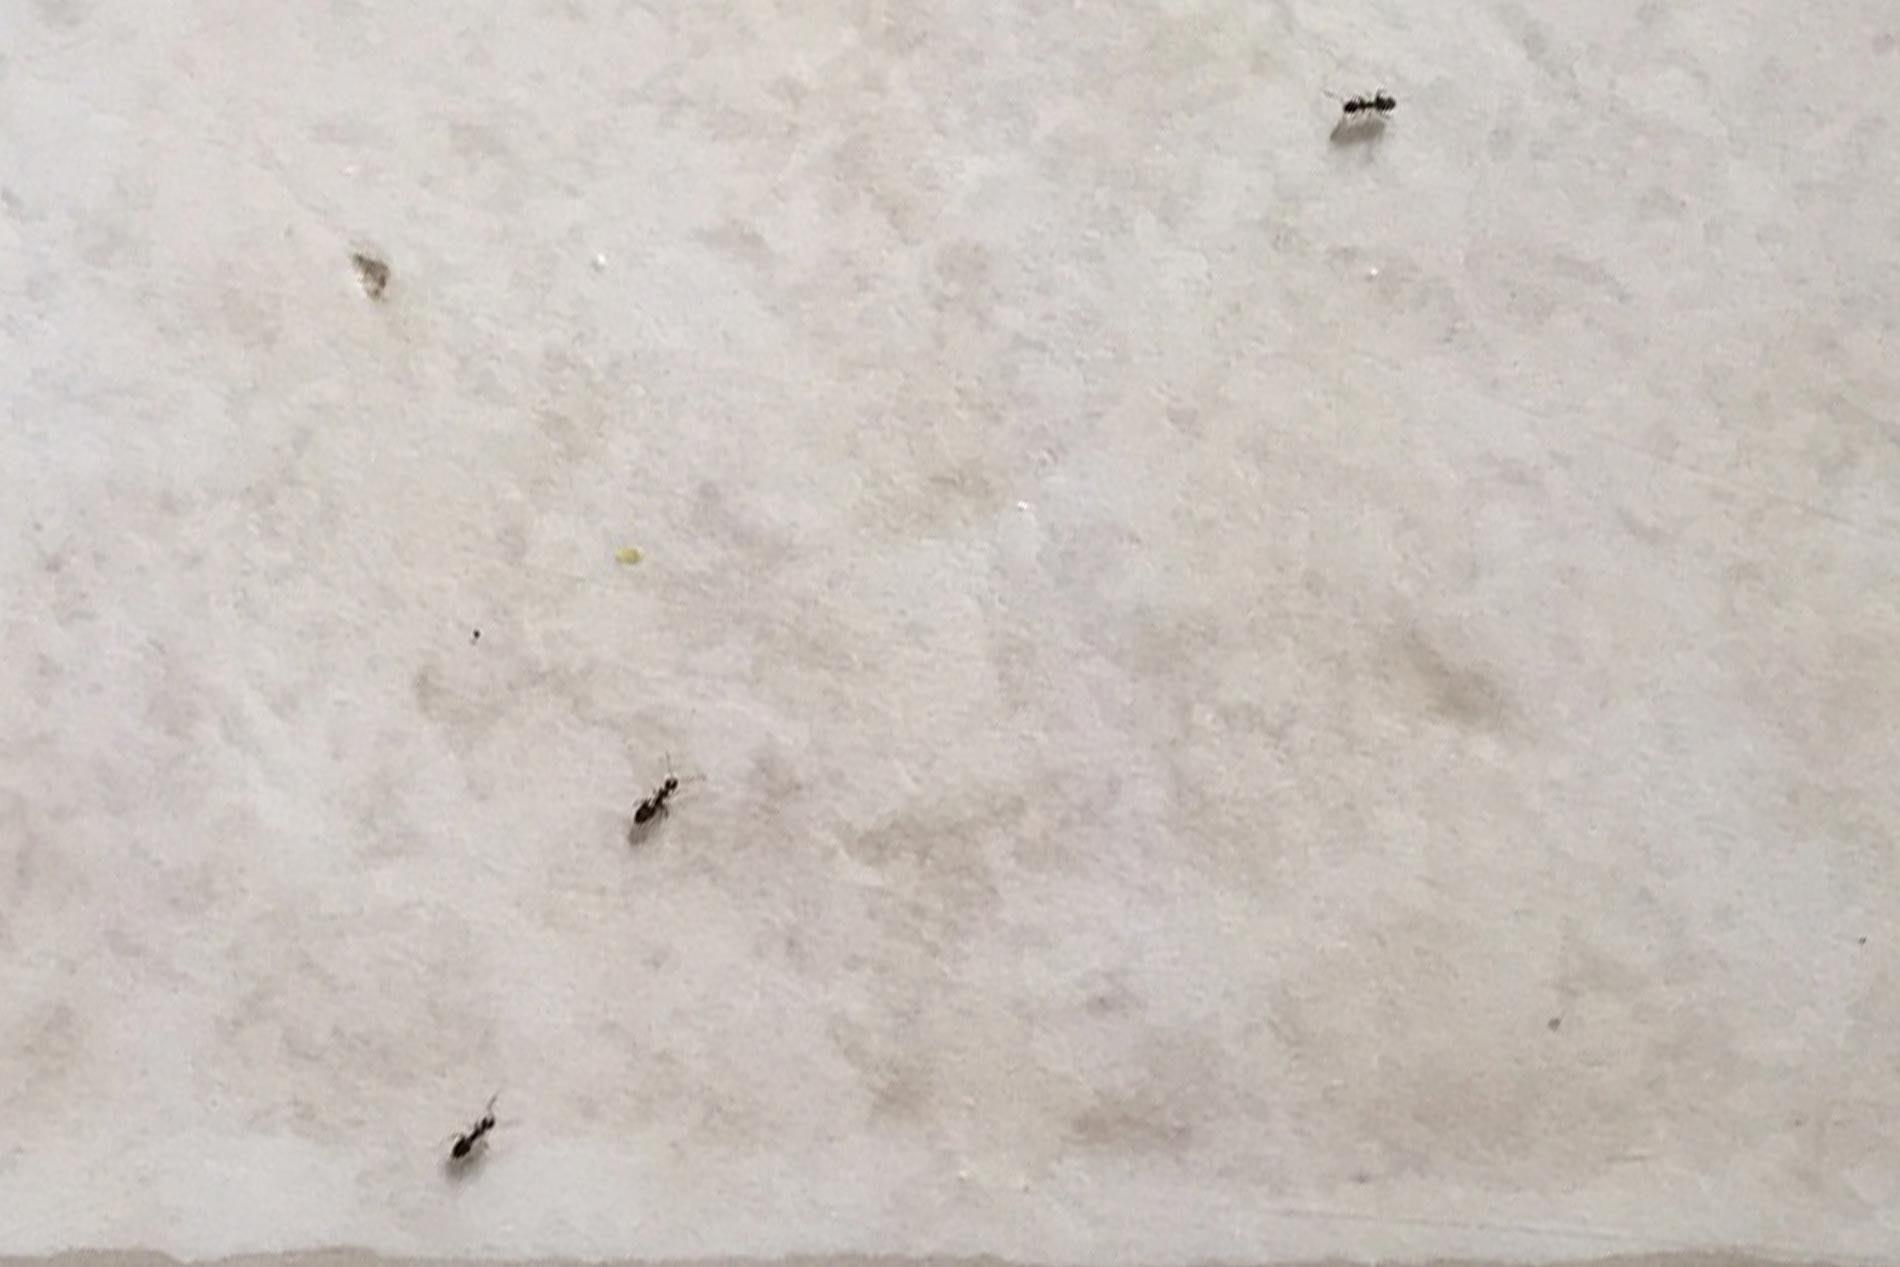 Odorous house ants